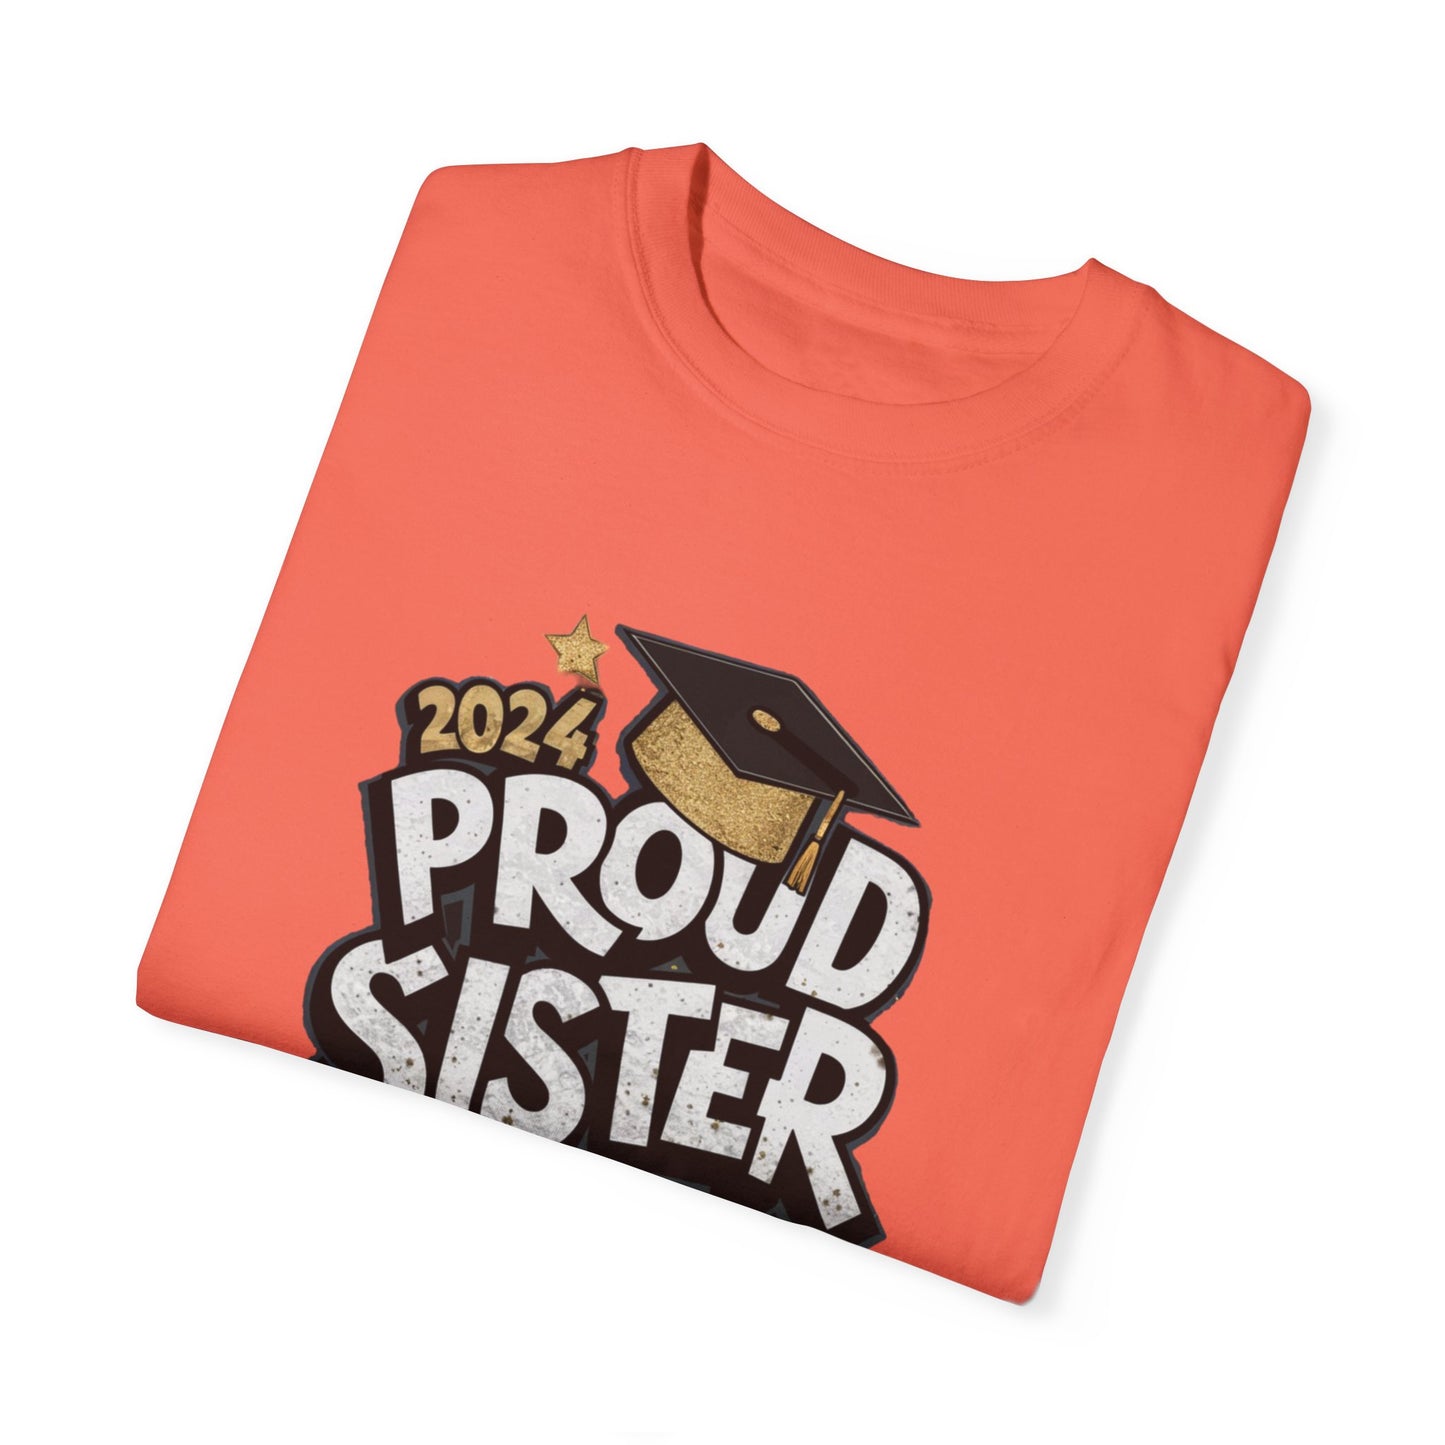 Proud Sister of a 2024 Graduate Unisex Garment-dyed T-shirt Cotton Funny Humorous Graphic Soft Premium Unisex Men Women Bright Salmon T-shirt Birthday Gift-32